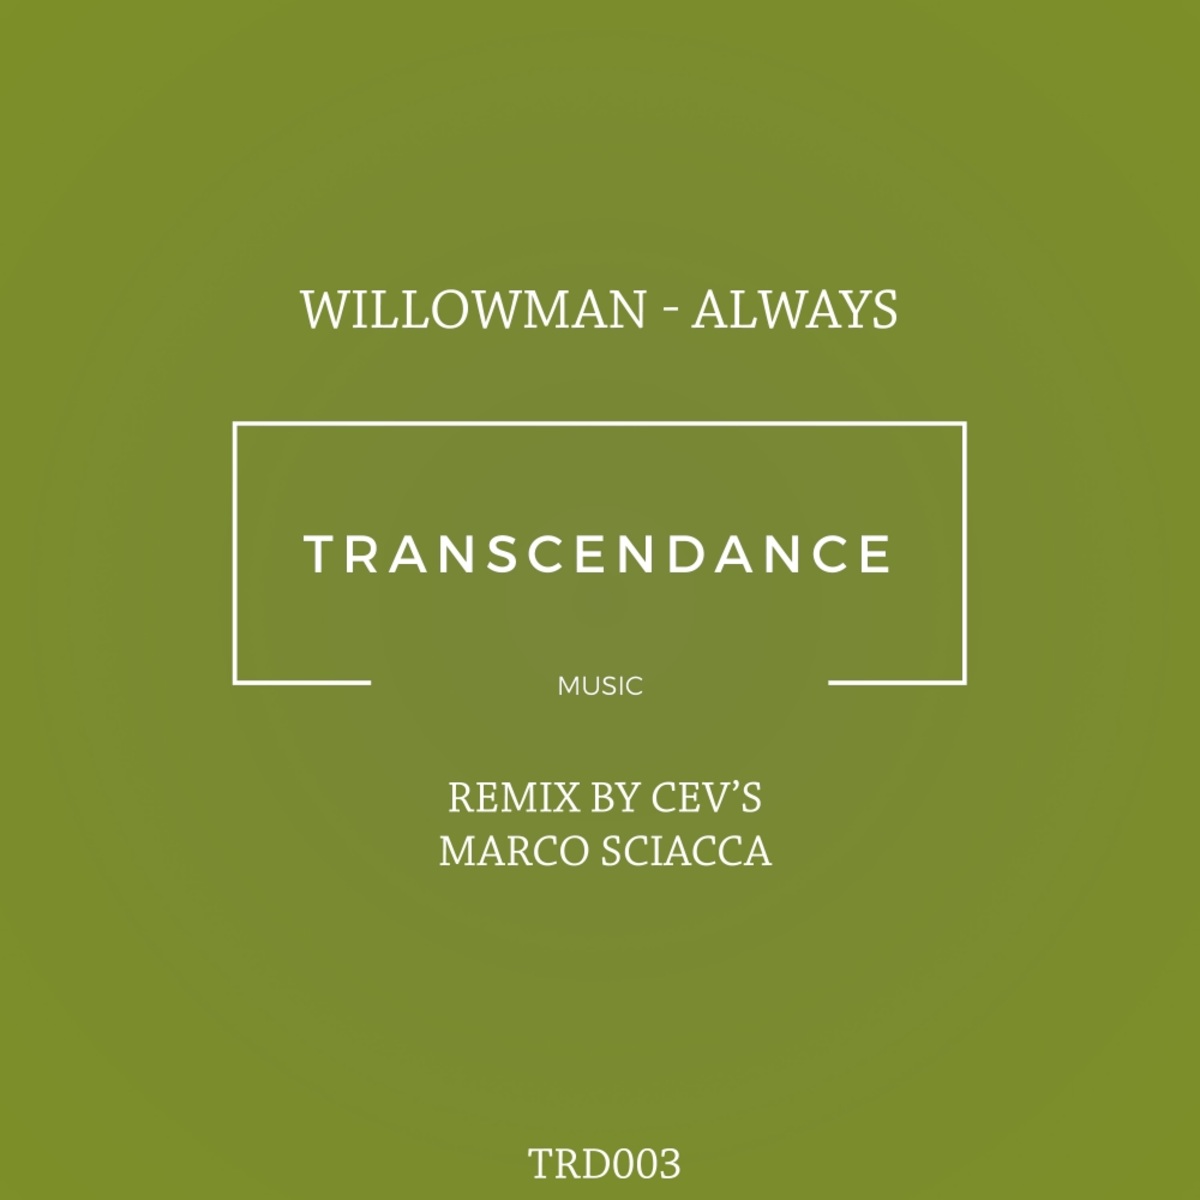 WillowMan - Always / Transcendance Music